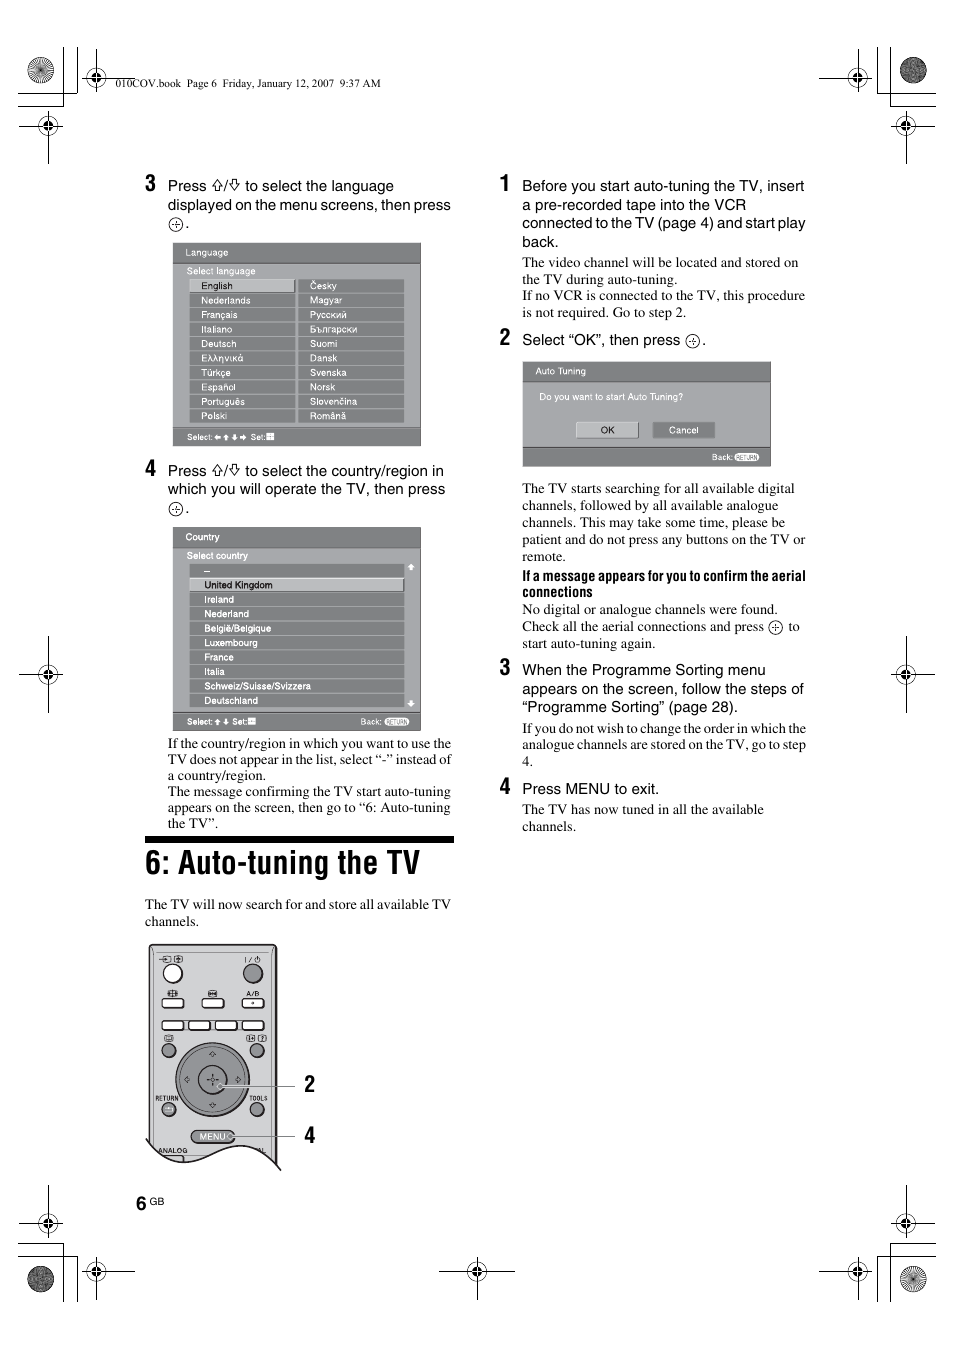 Auto-tuning the tv | Sony KDL-46V2500 Benutzerhandbuch | Seite 6 / 208